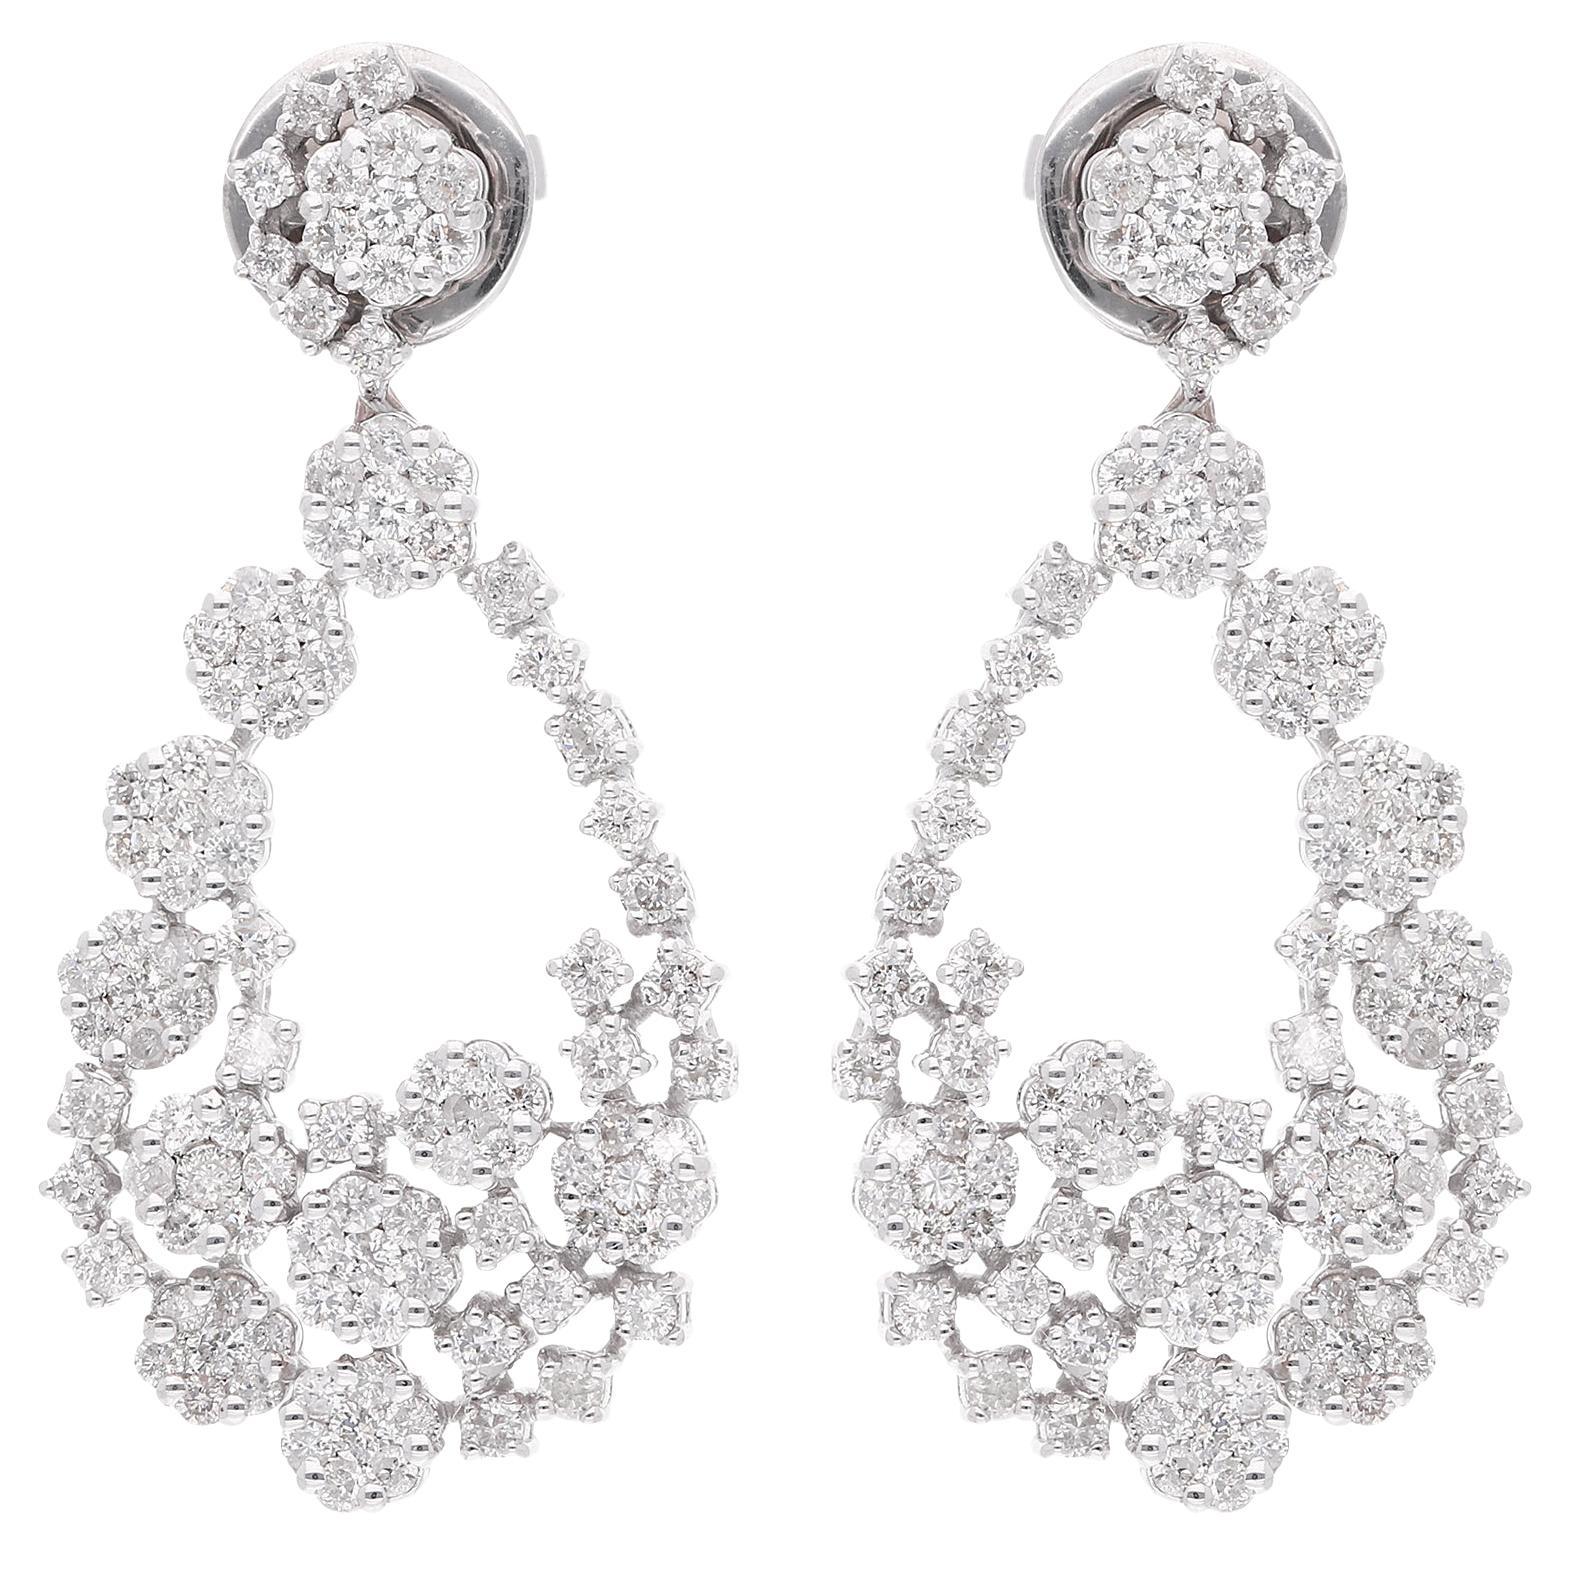 SI Clarity HI Color Diamond Dangle Earrings 18 Karat White Gold Handmade Jewelry